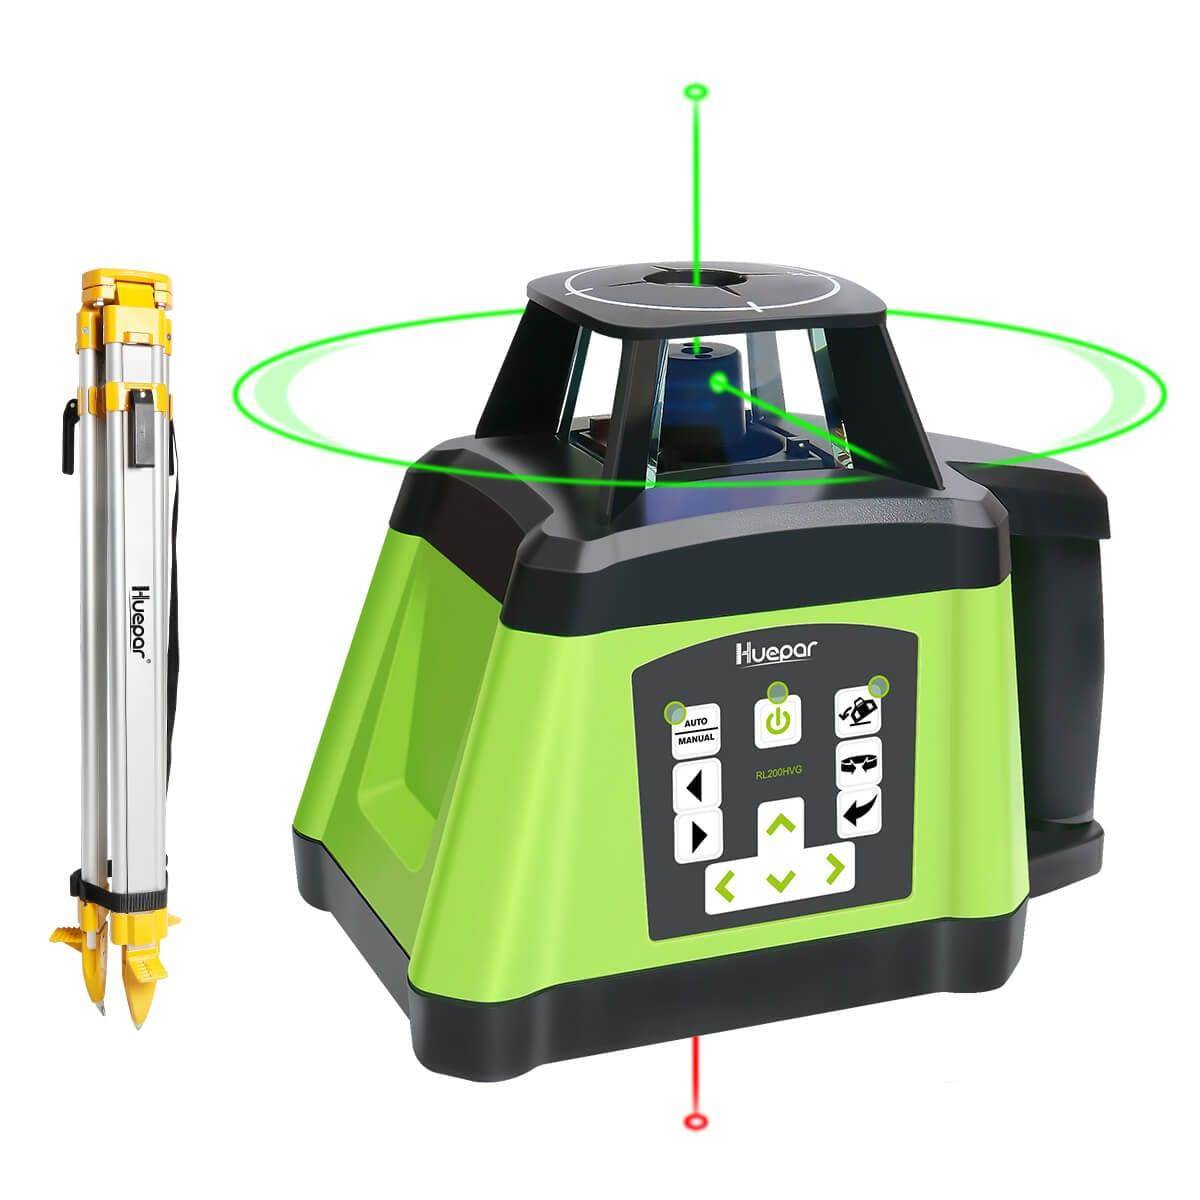 Huepar RL200HVG - Electronic Self-Leveling Green Rotary Laser Level + Plumb Points with Receiver - HUEPAR UK